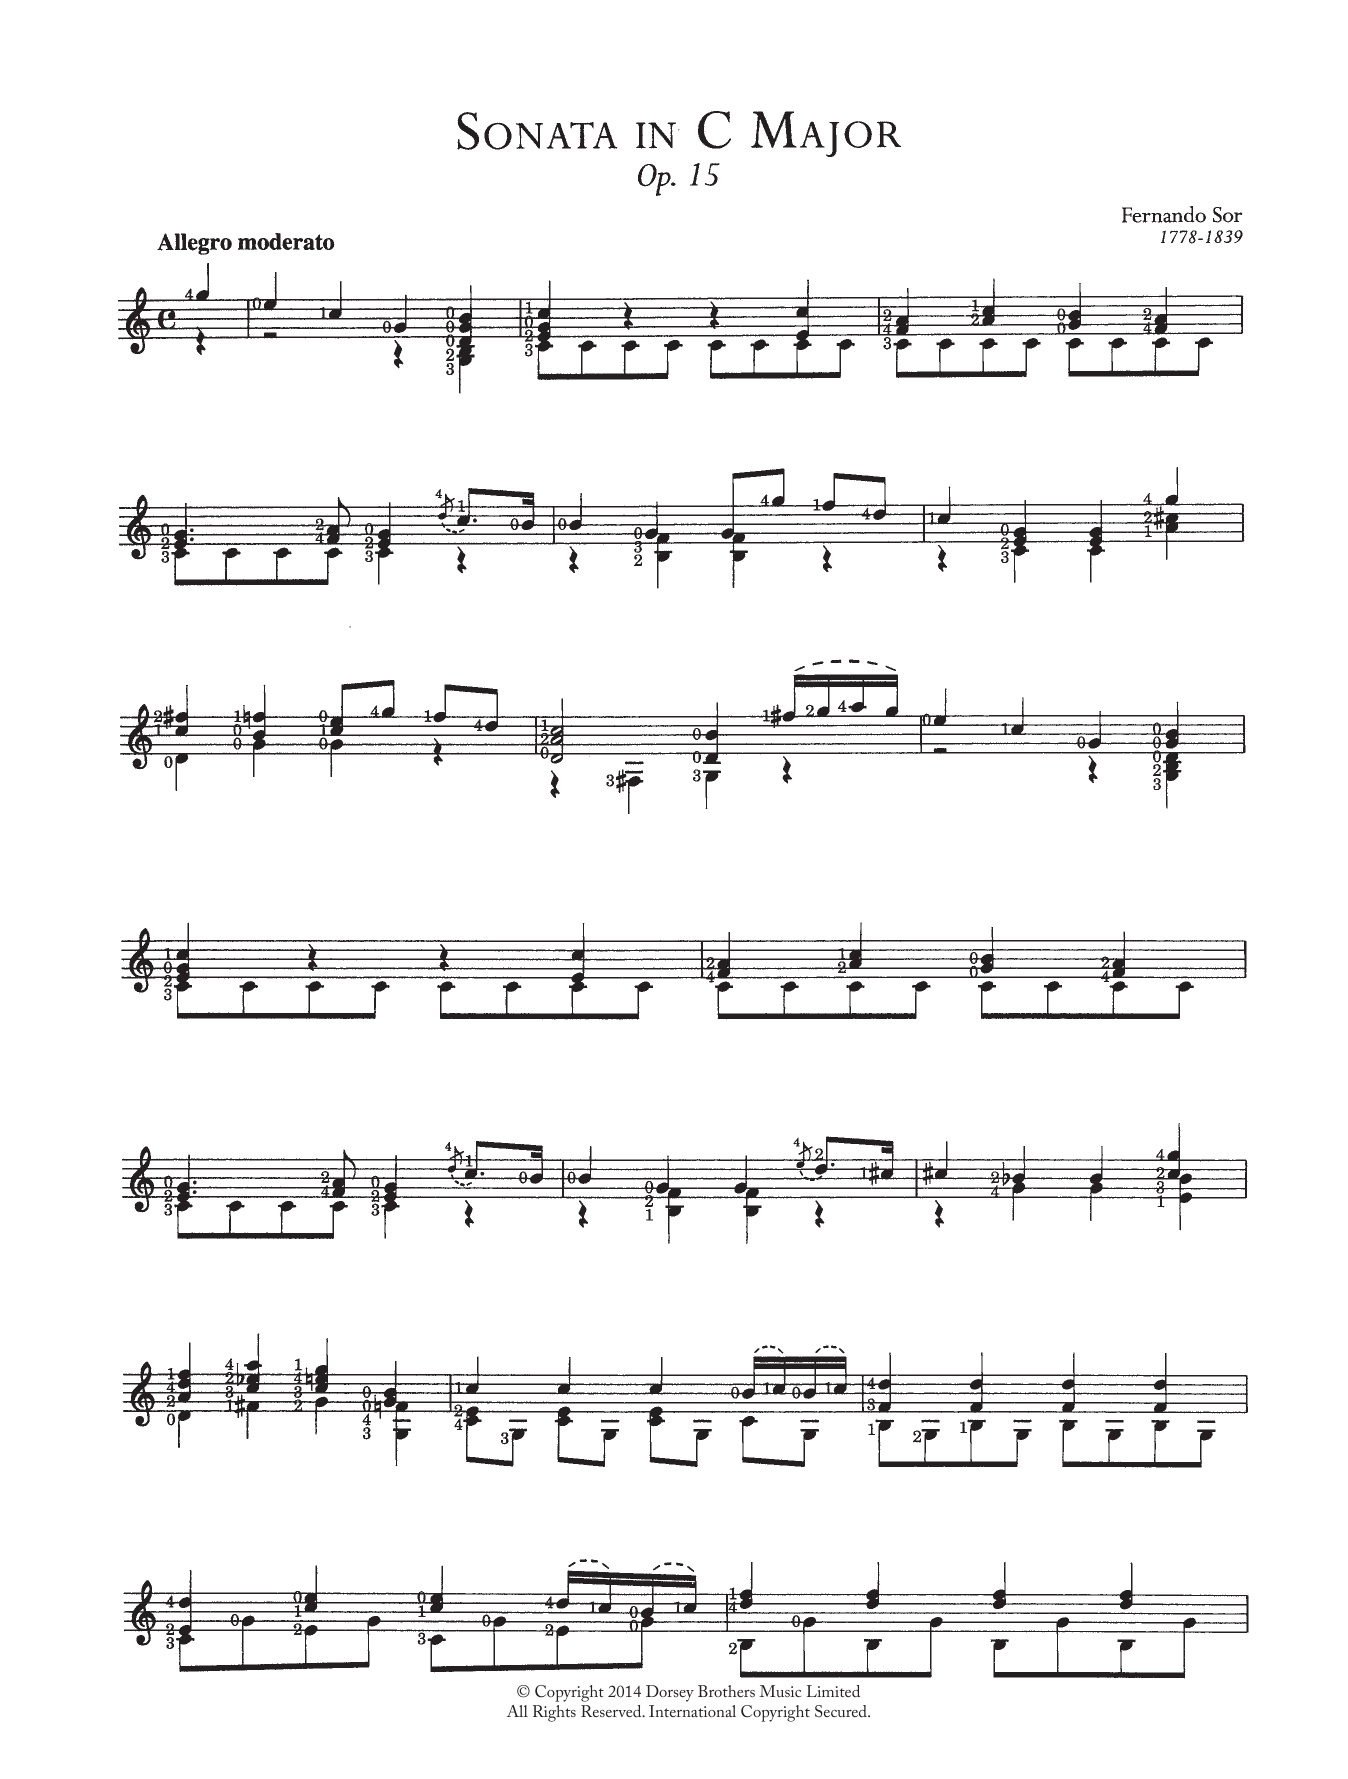 Fernando Sor Sonata In C Major, Op.15 Sheet Music Notes & Chords for Guitar - Download or Print PDF